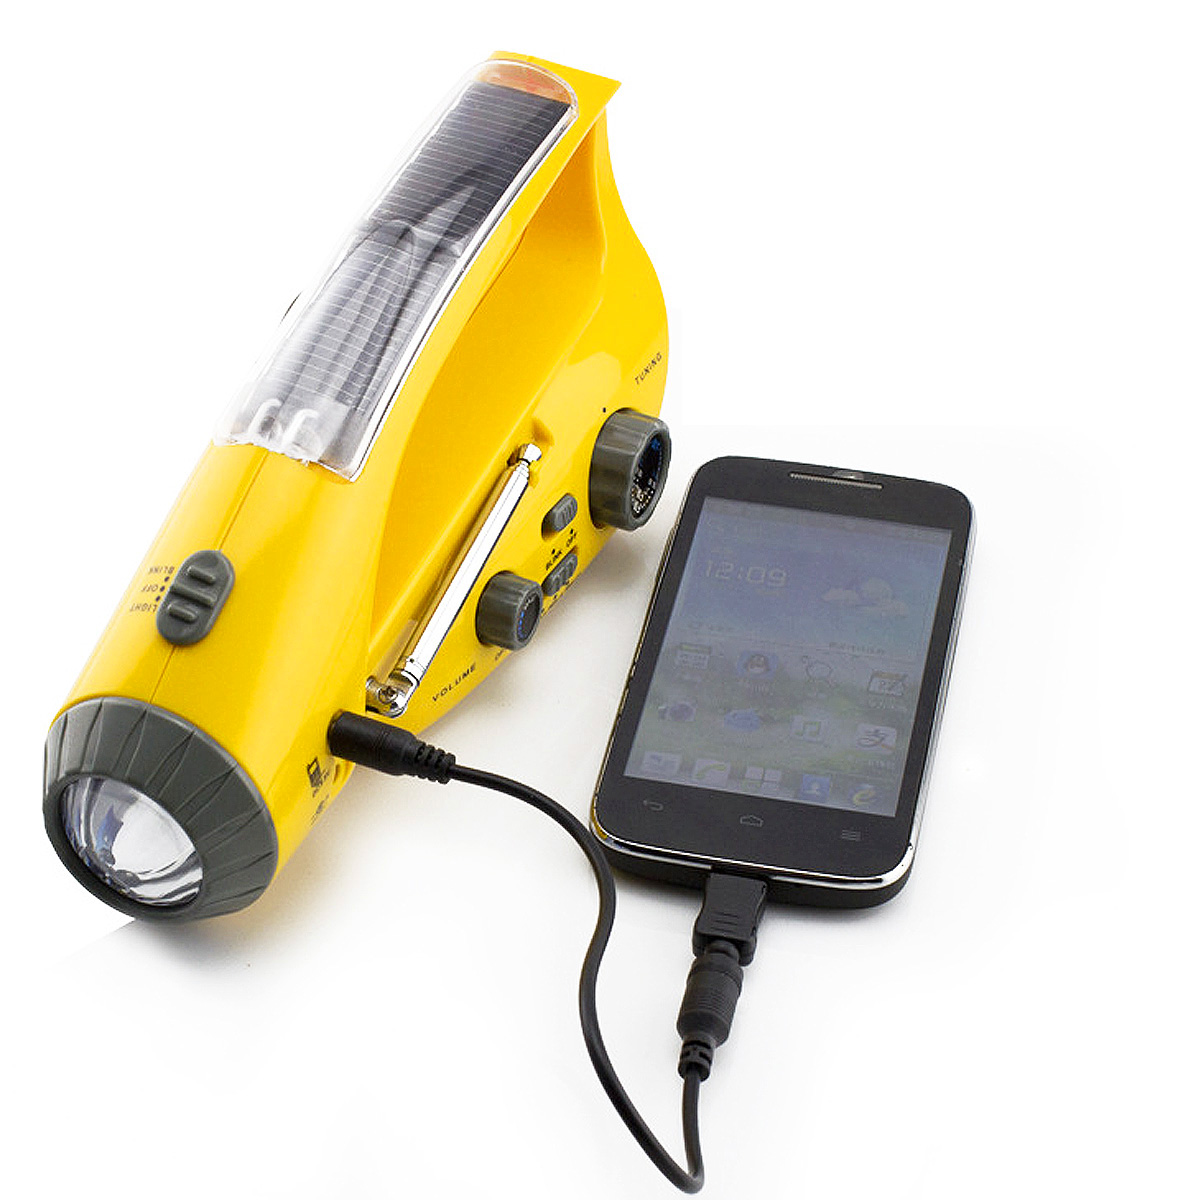 

Solar/ Hand Crank Dynamo Emergency LED Flashlight Torch Alarm Phone Charger Radio